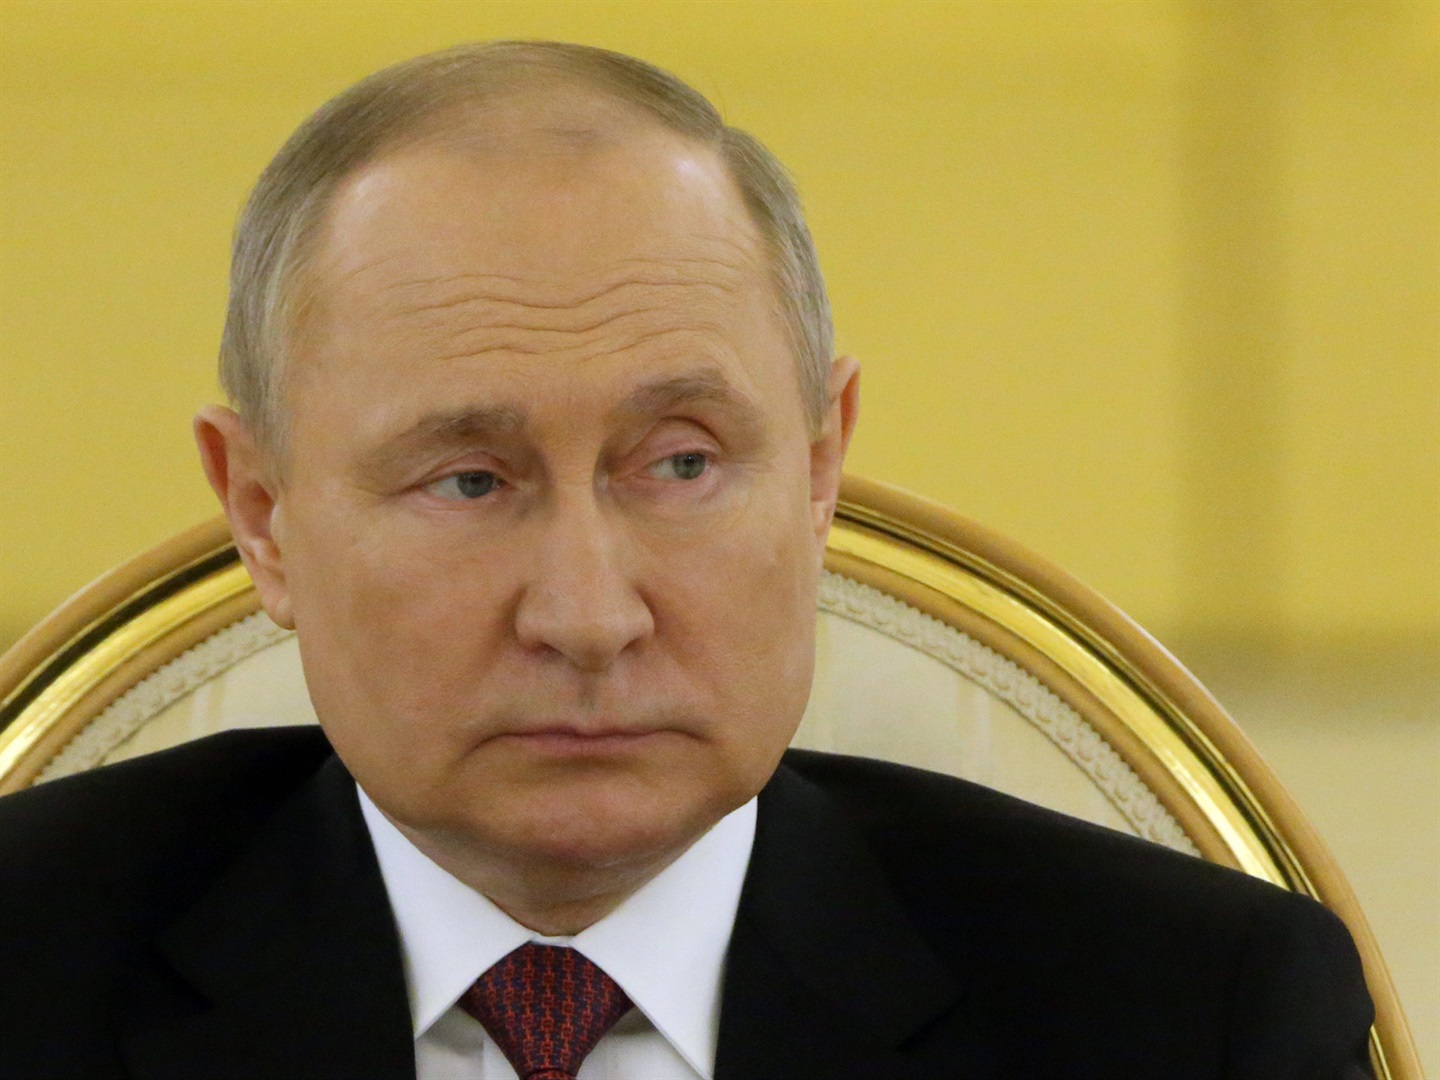 Russian president Vladimir Putin. Contributor/Getty Images